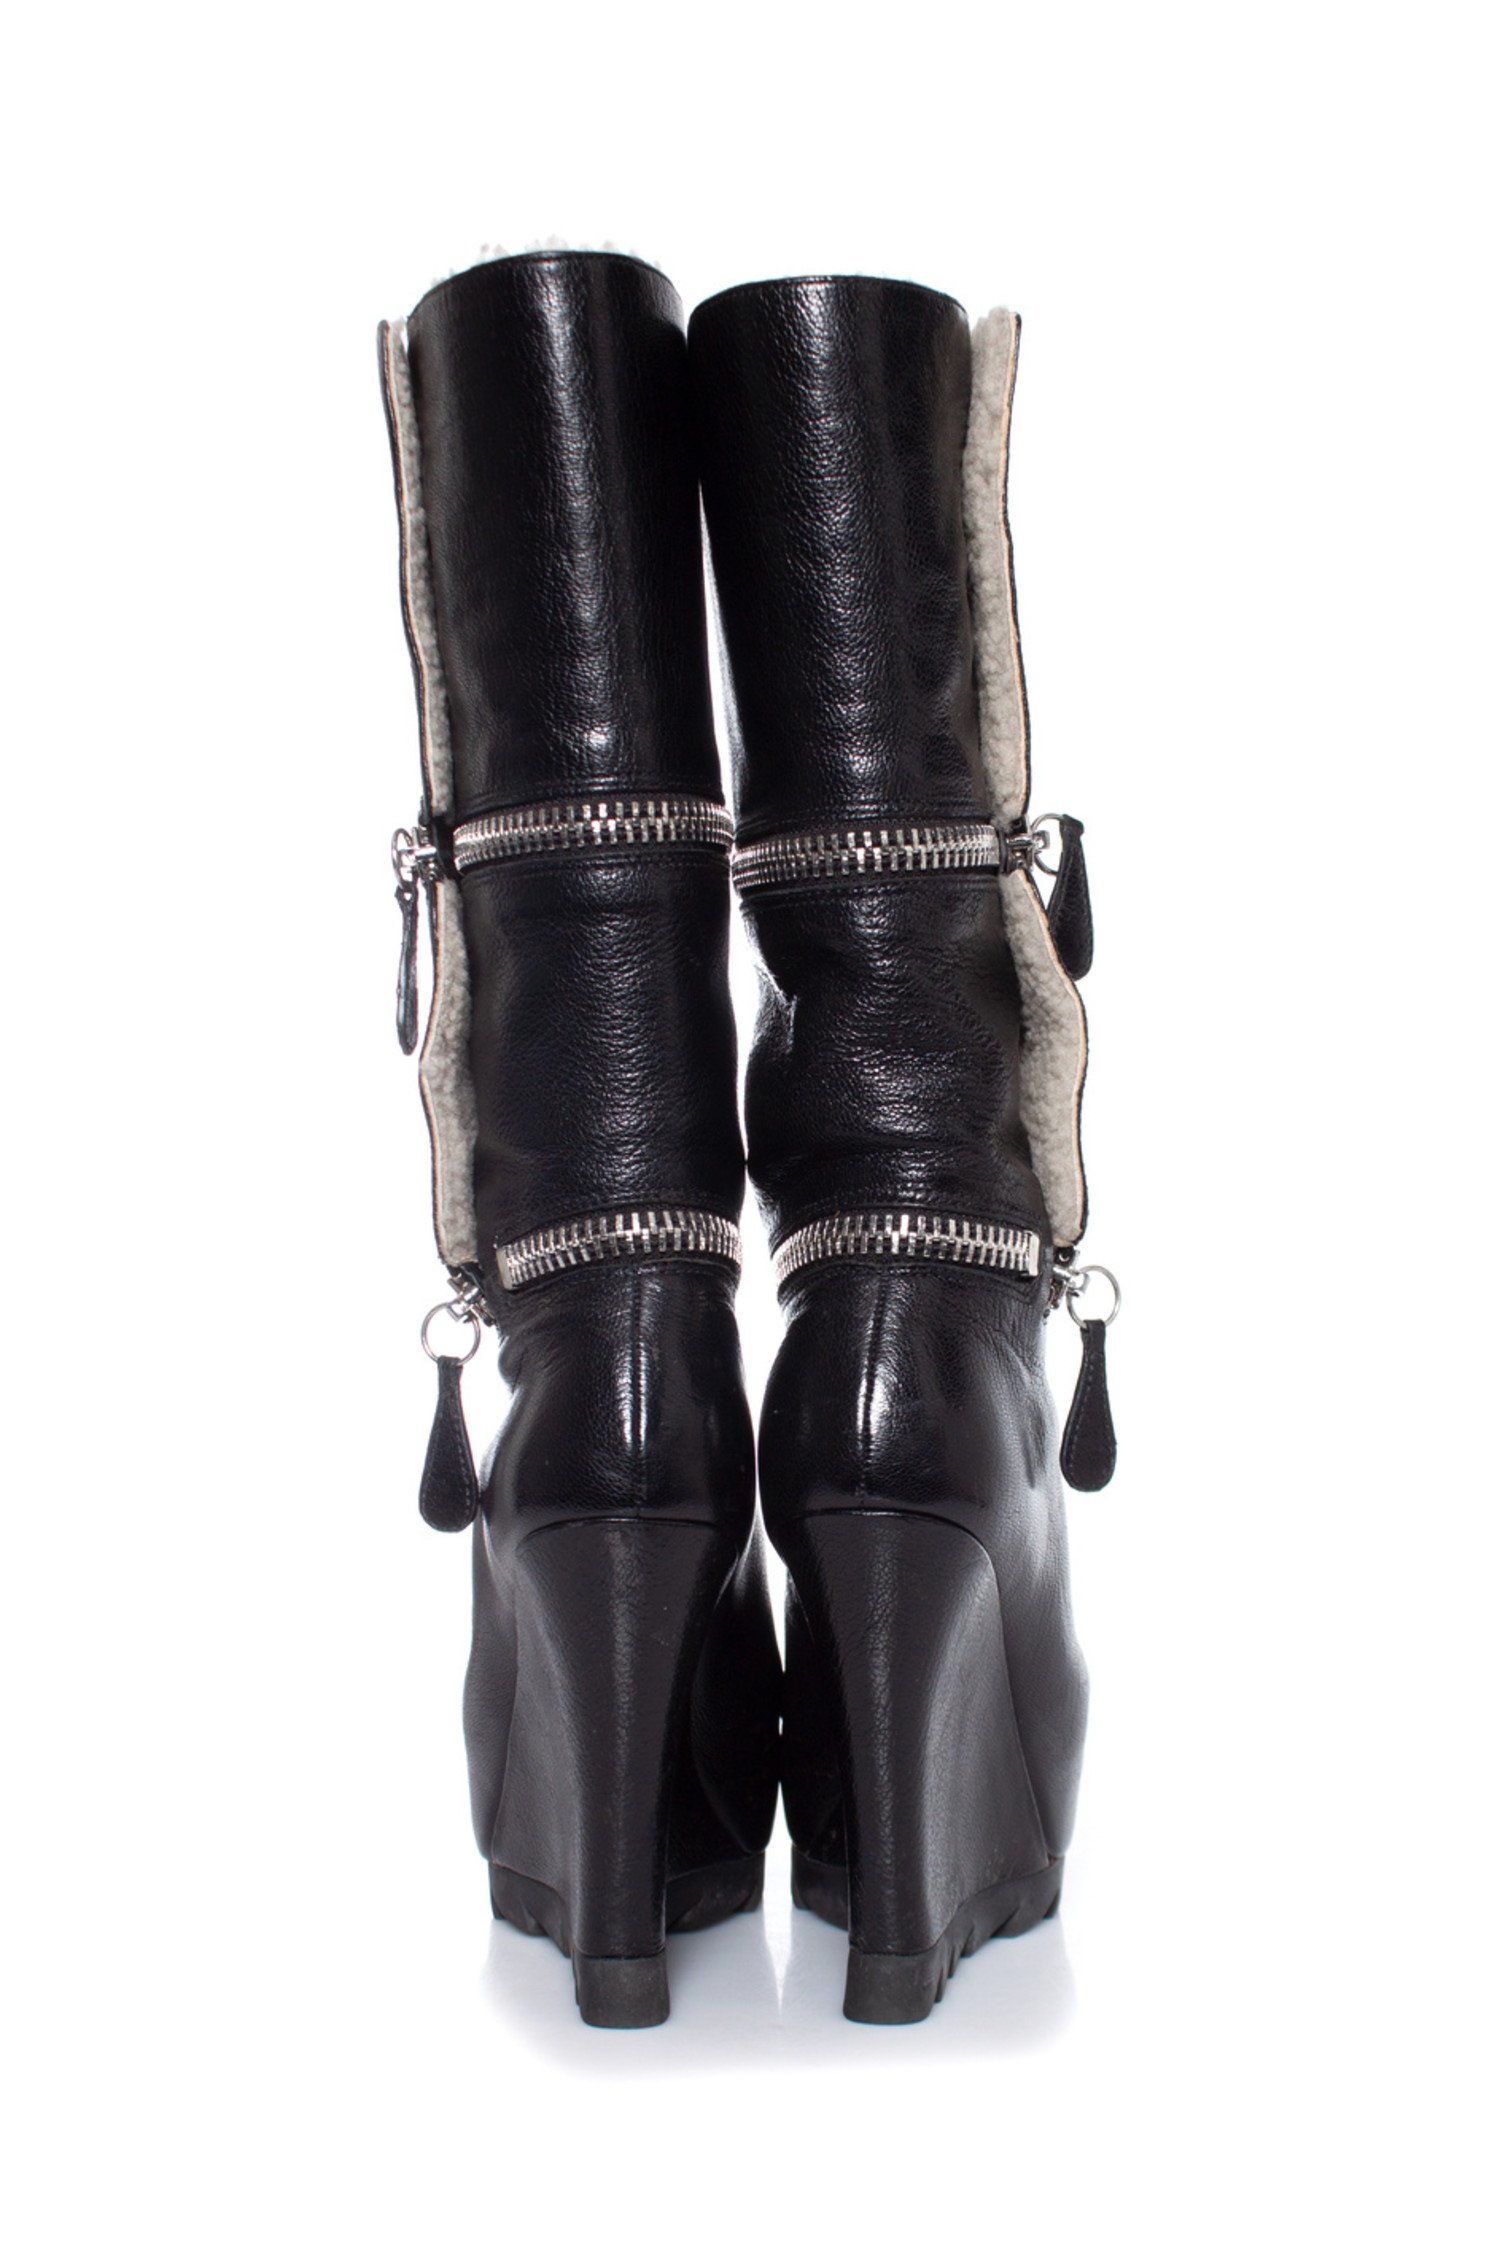 Camilla Skovgaard, 3 in 1 leather zip wedge boots - Unique